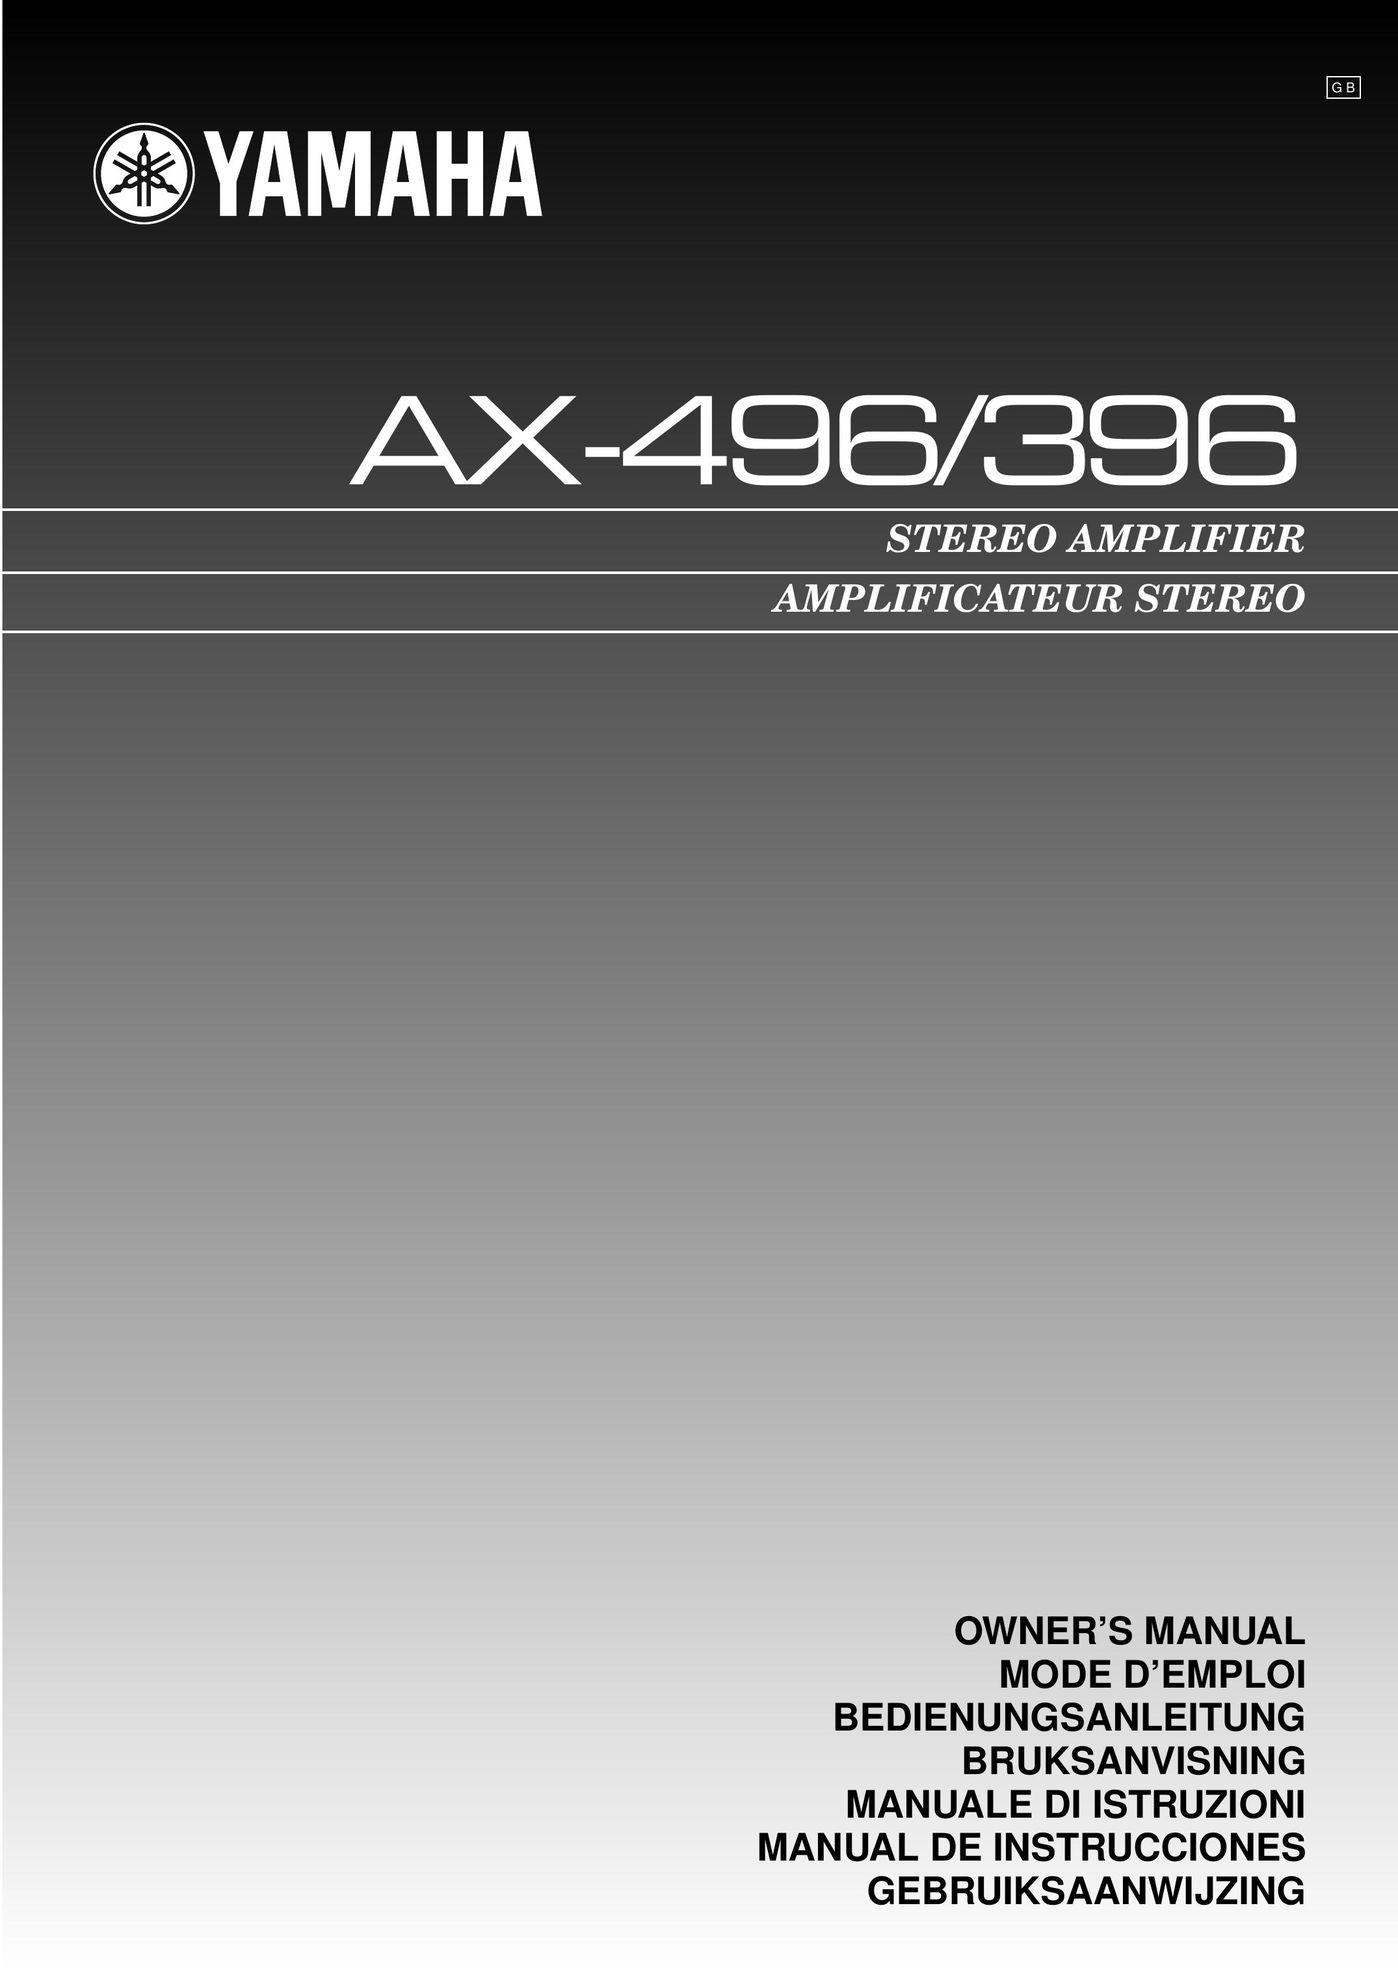 Yamaha AX-496 Stereo Amplifier User Manual